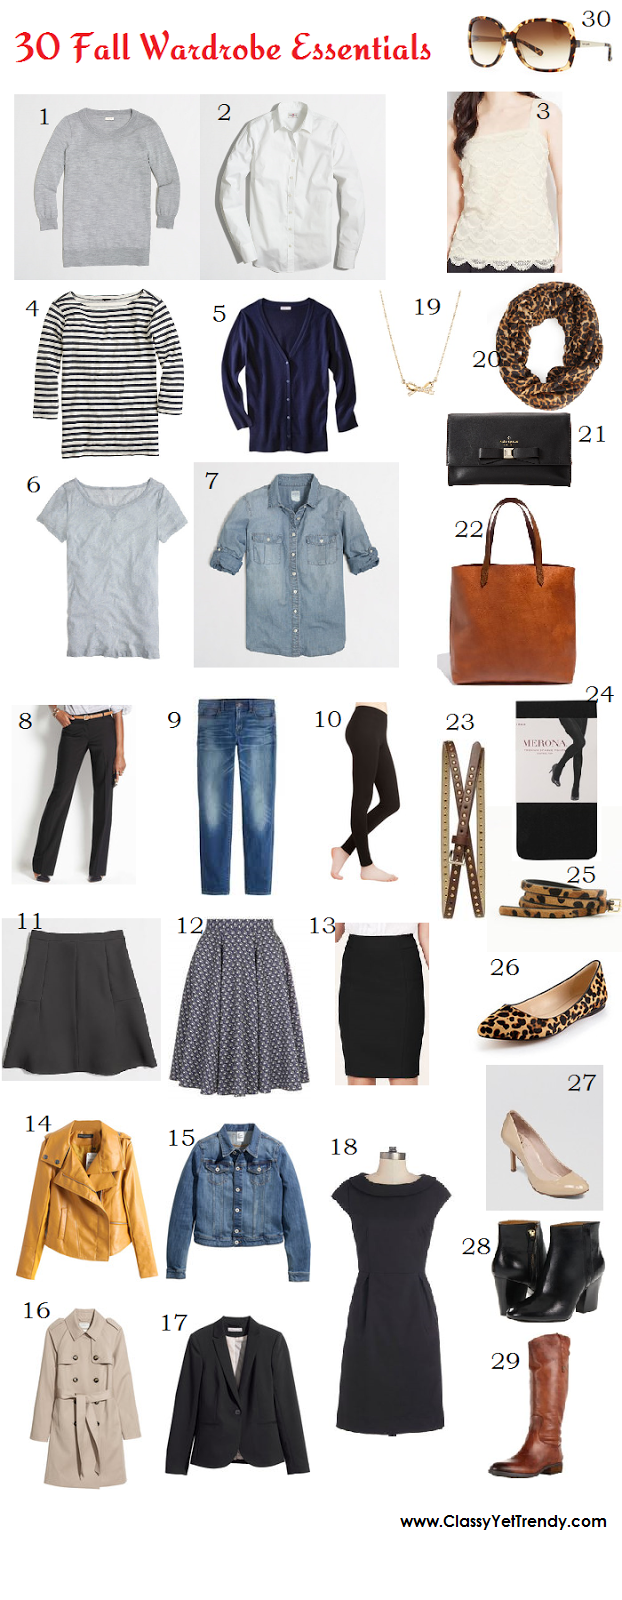 Trendy Wednesday Link-Up #37: 30 Fall Wardrobe Essentials